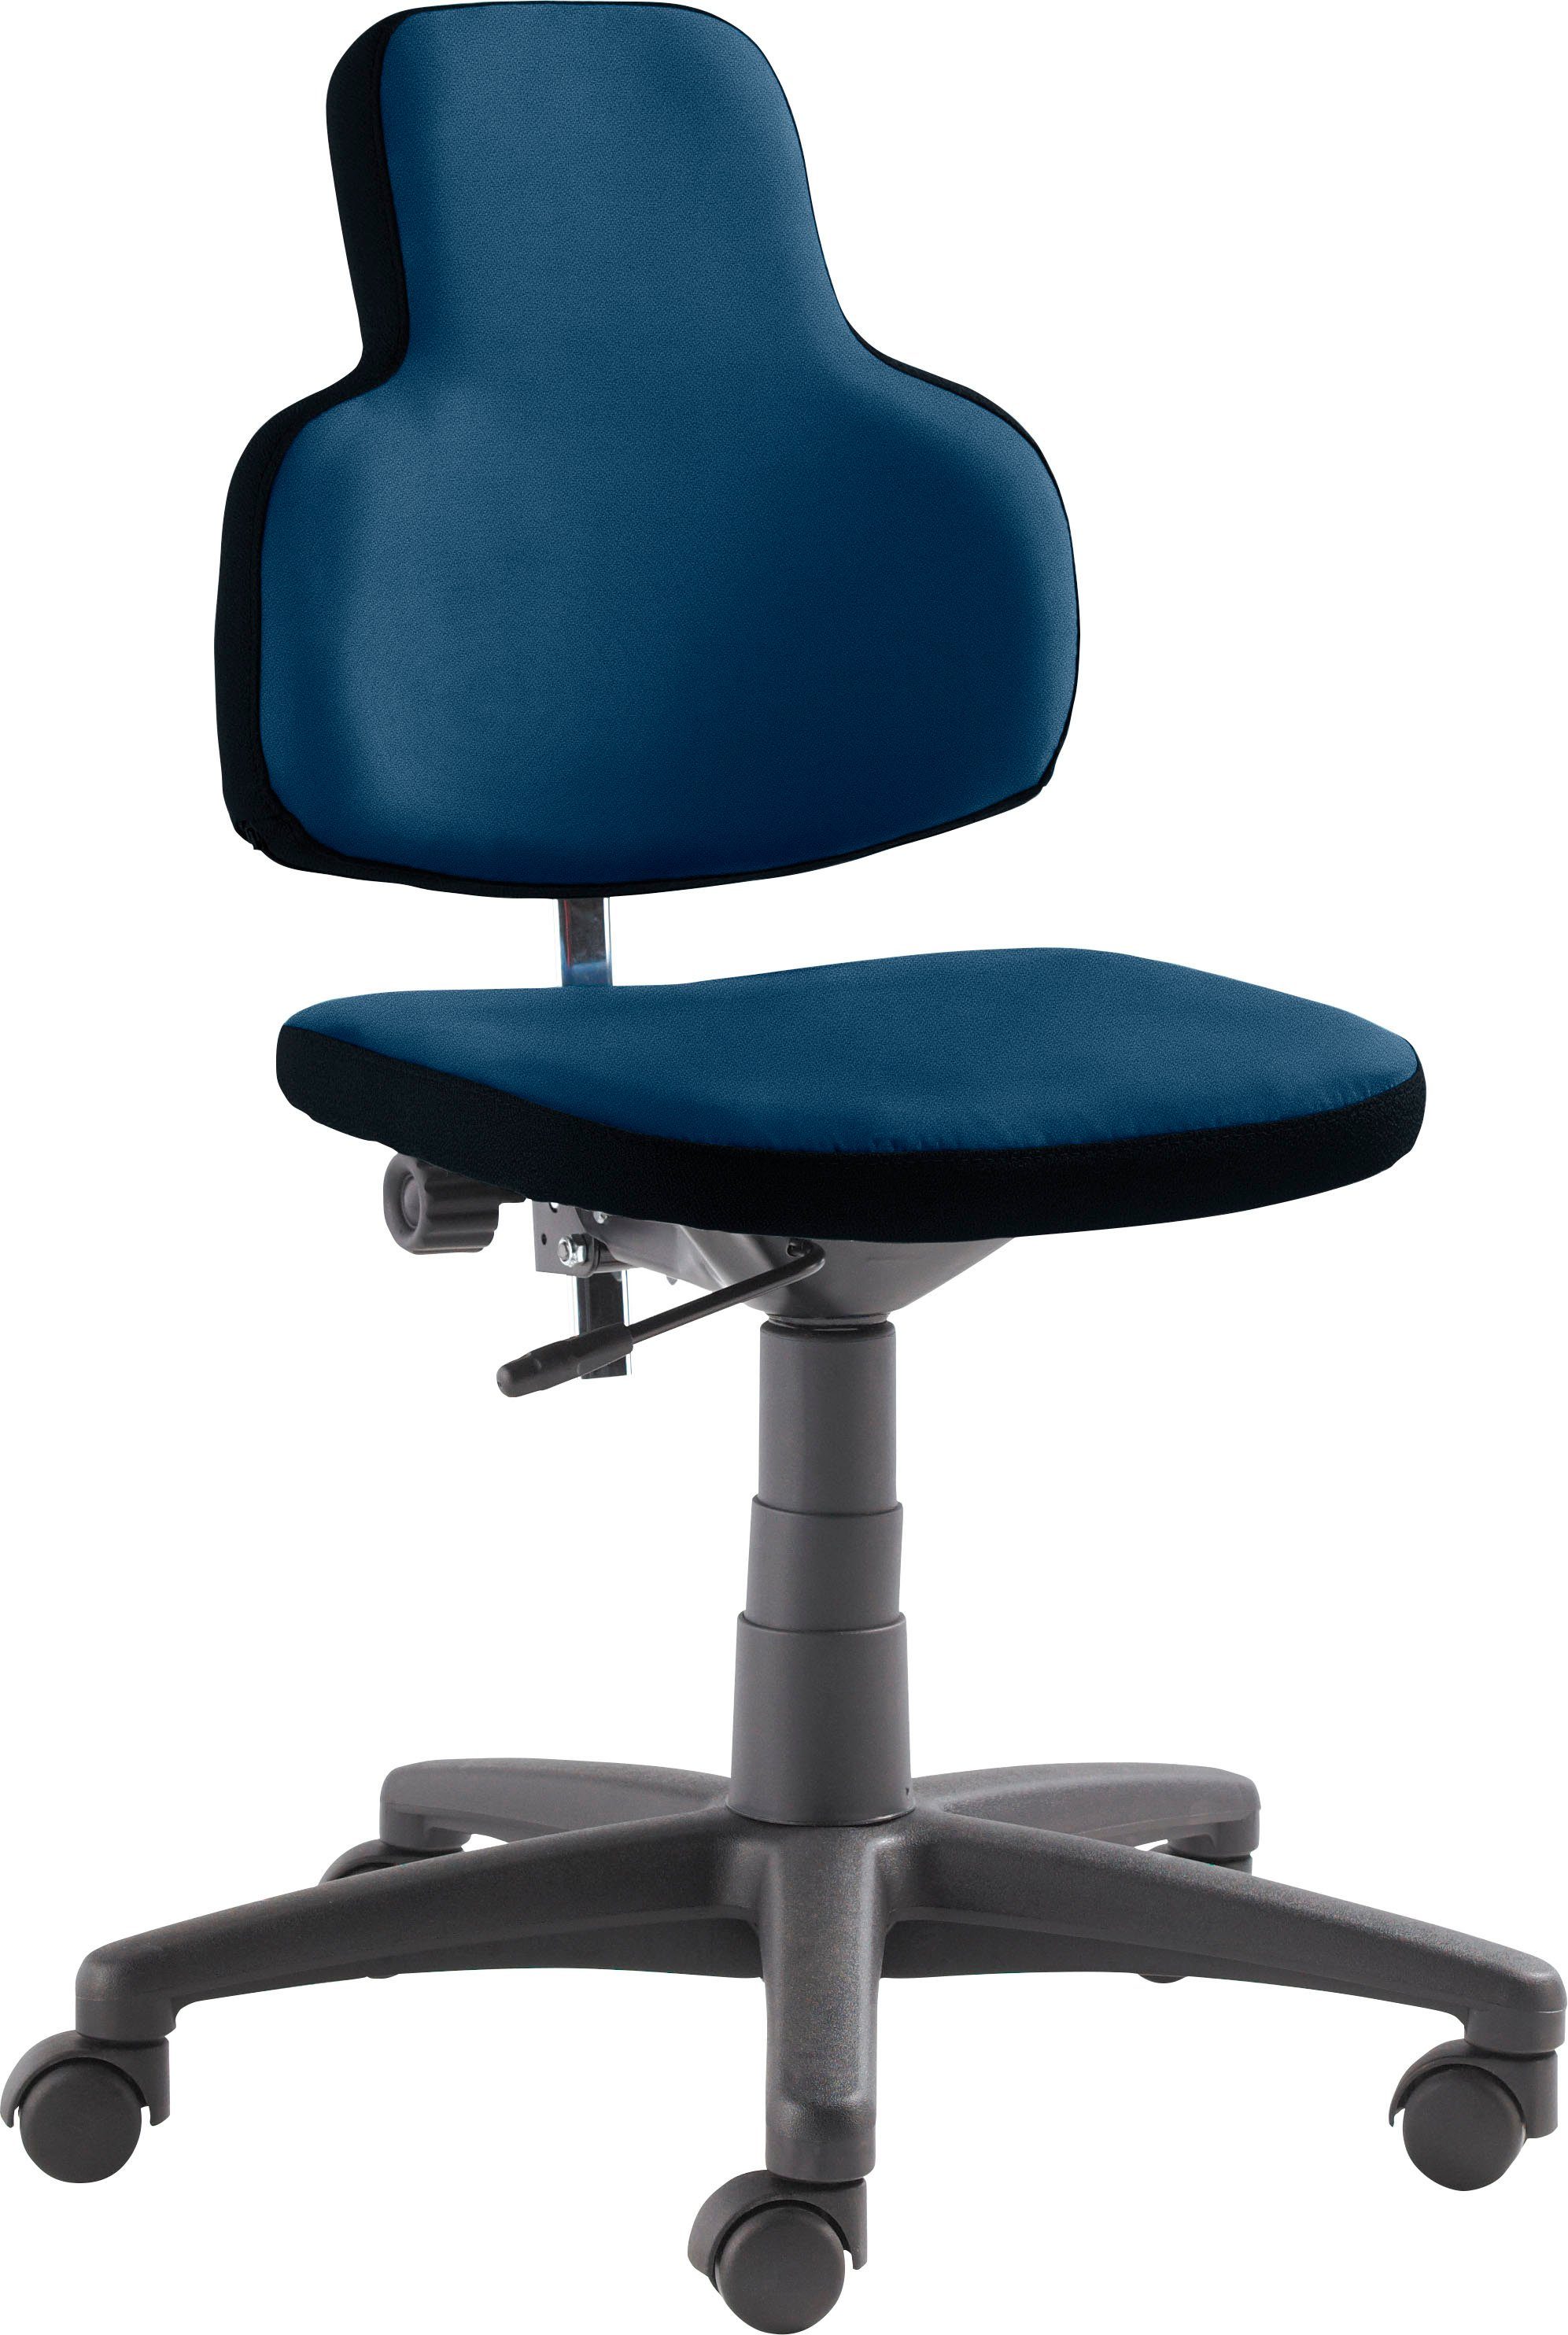 Mayer Sitzmöbel Bürostuhl Kinderdrehstuhl myONE, mitwachsend dunkelblau/schwarz | Dunkelblau